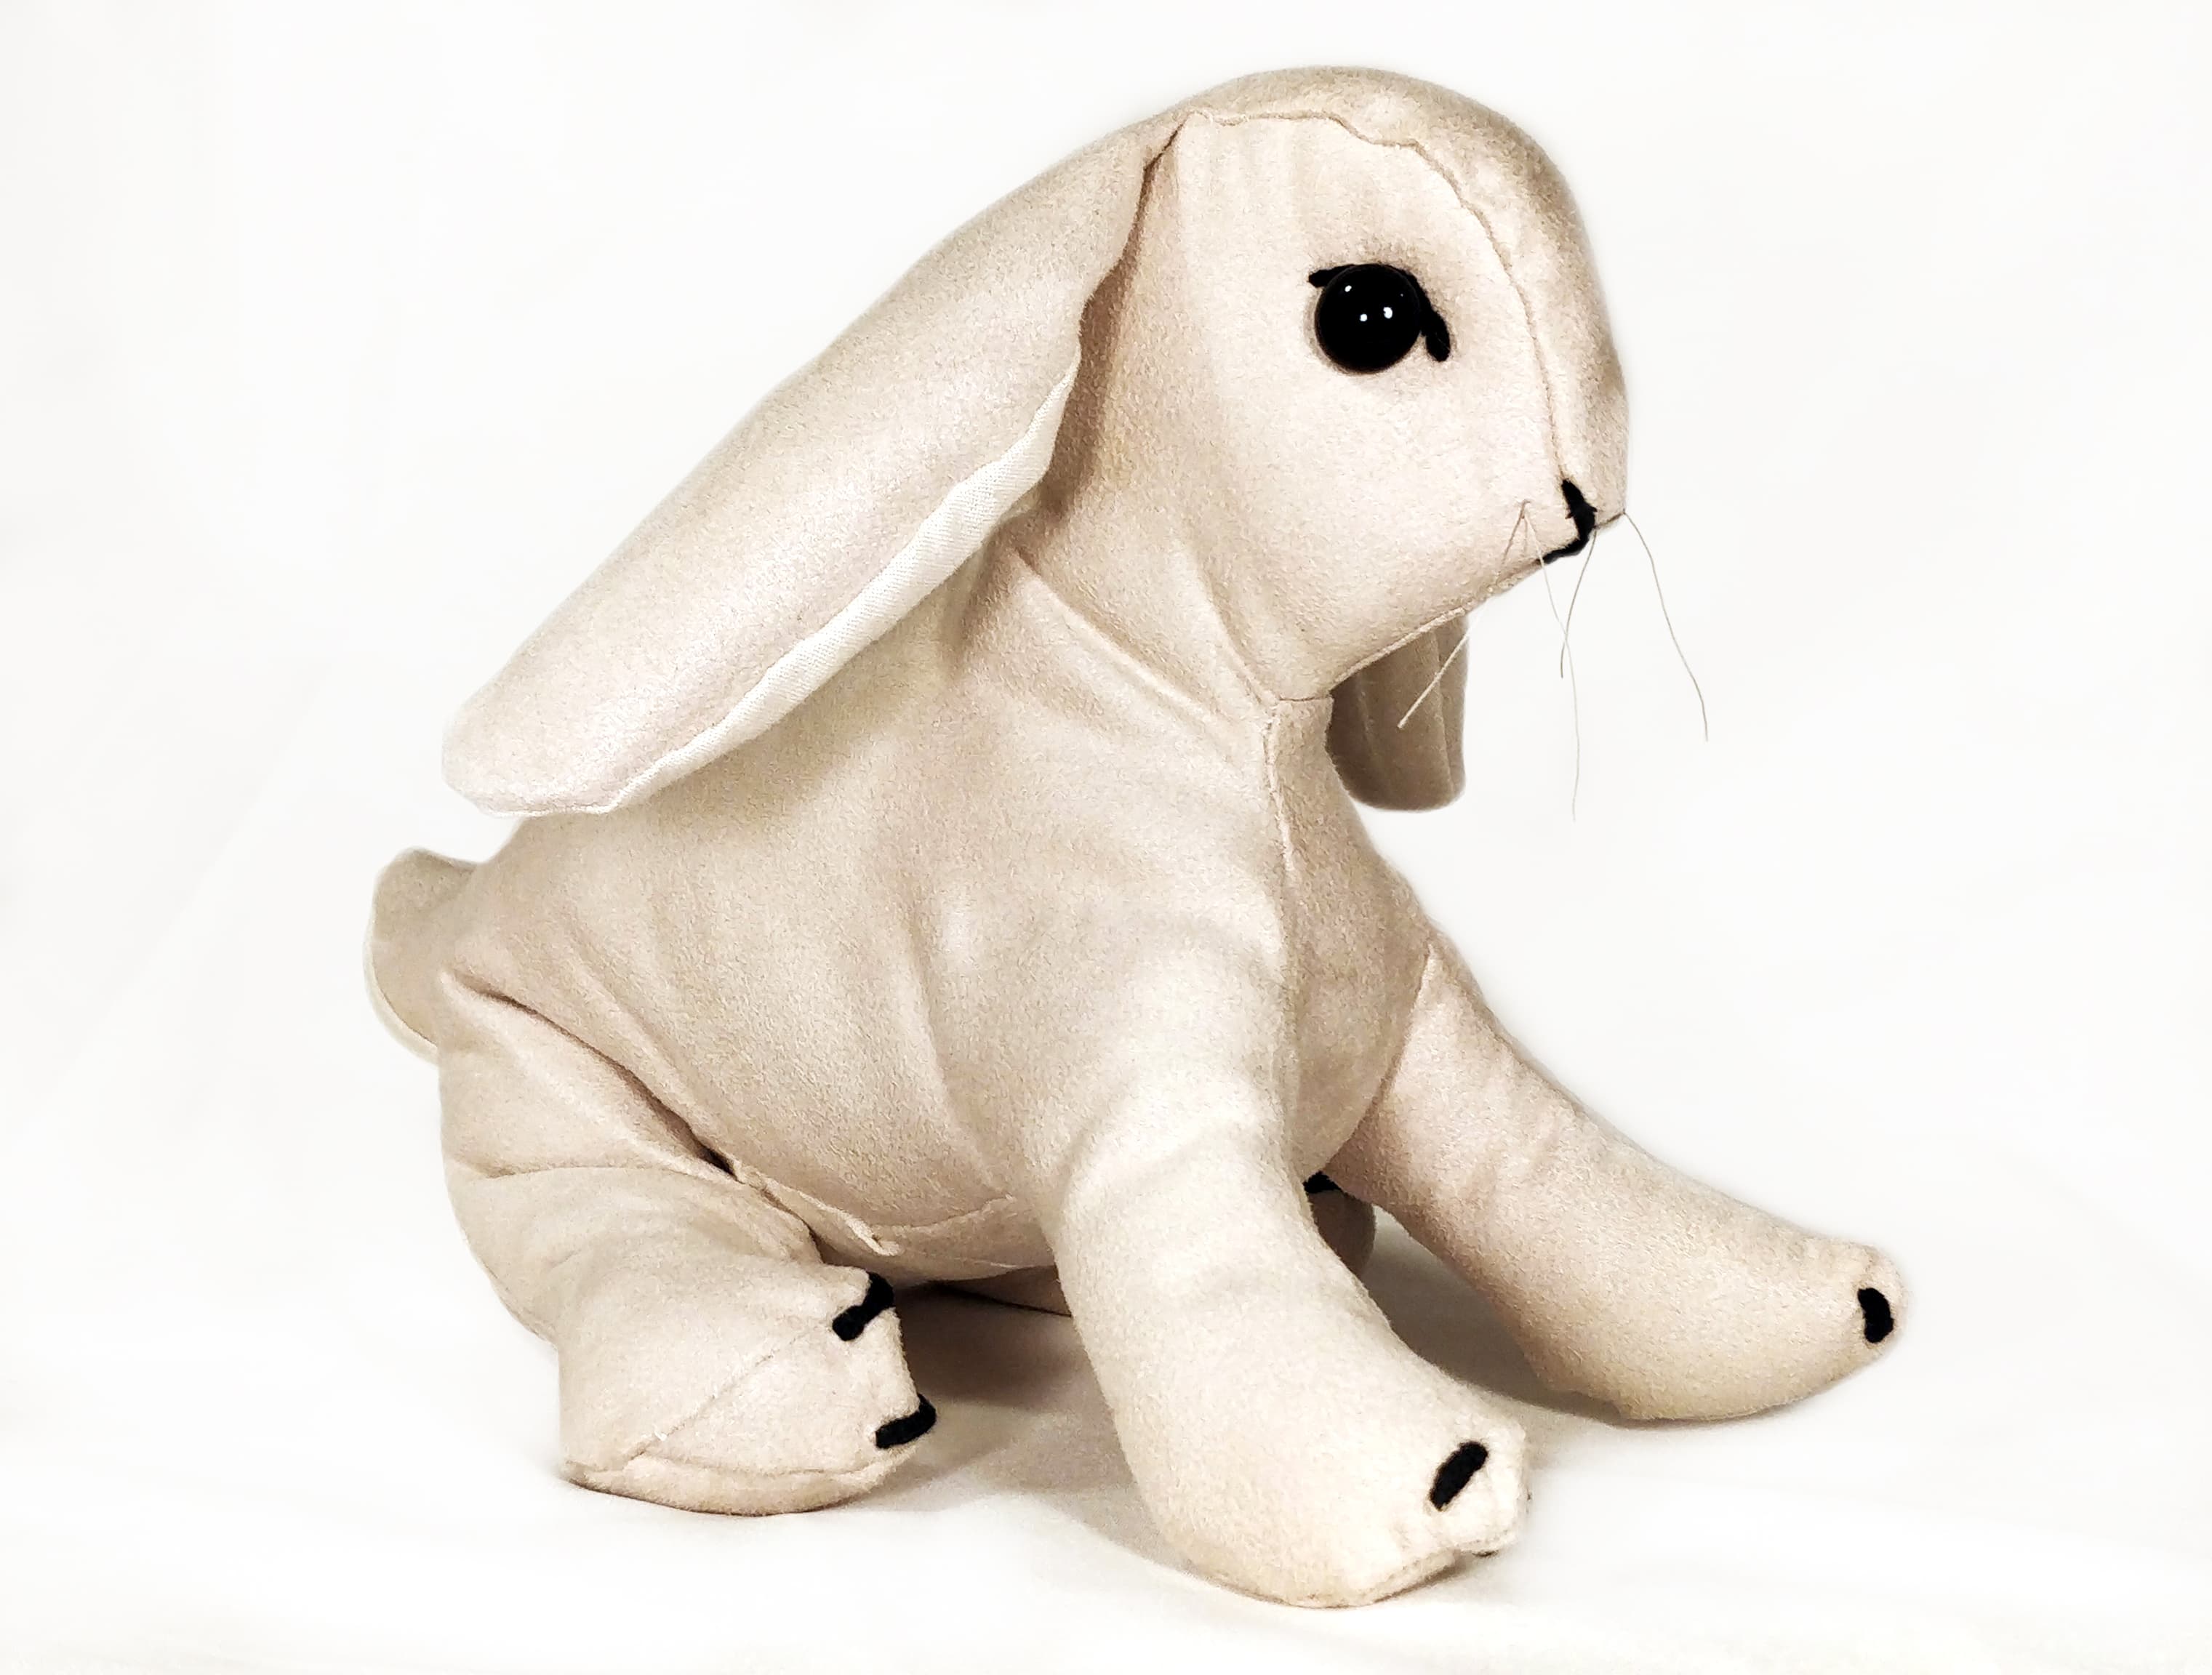 a soft toy rabbit sitting